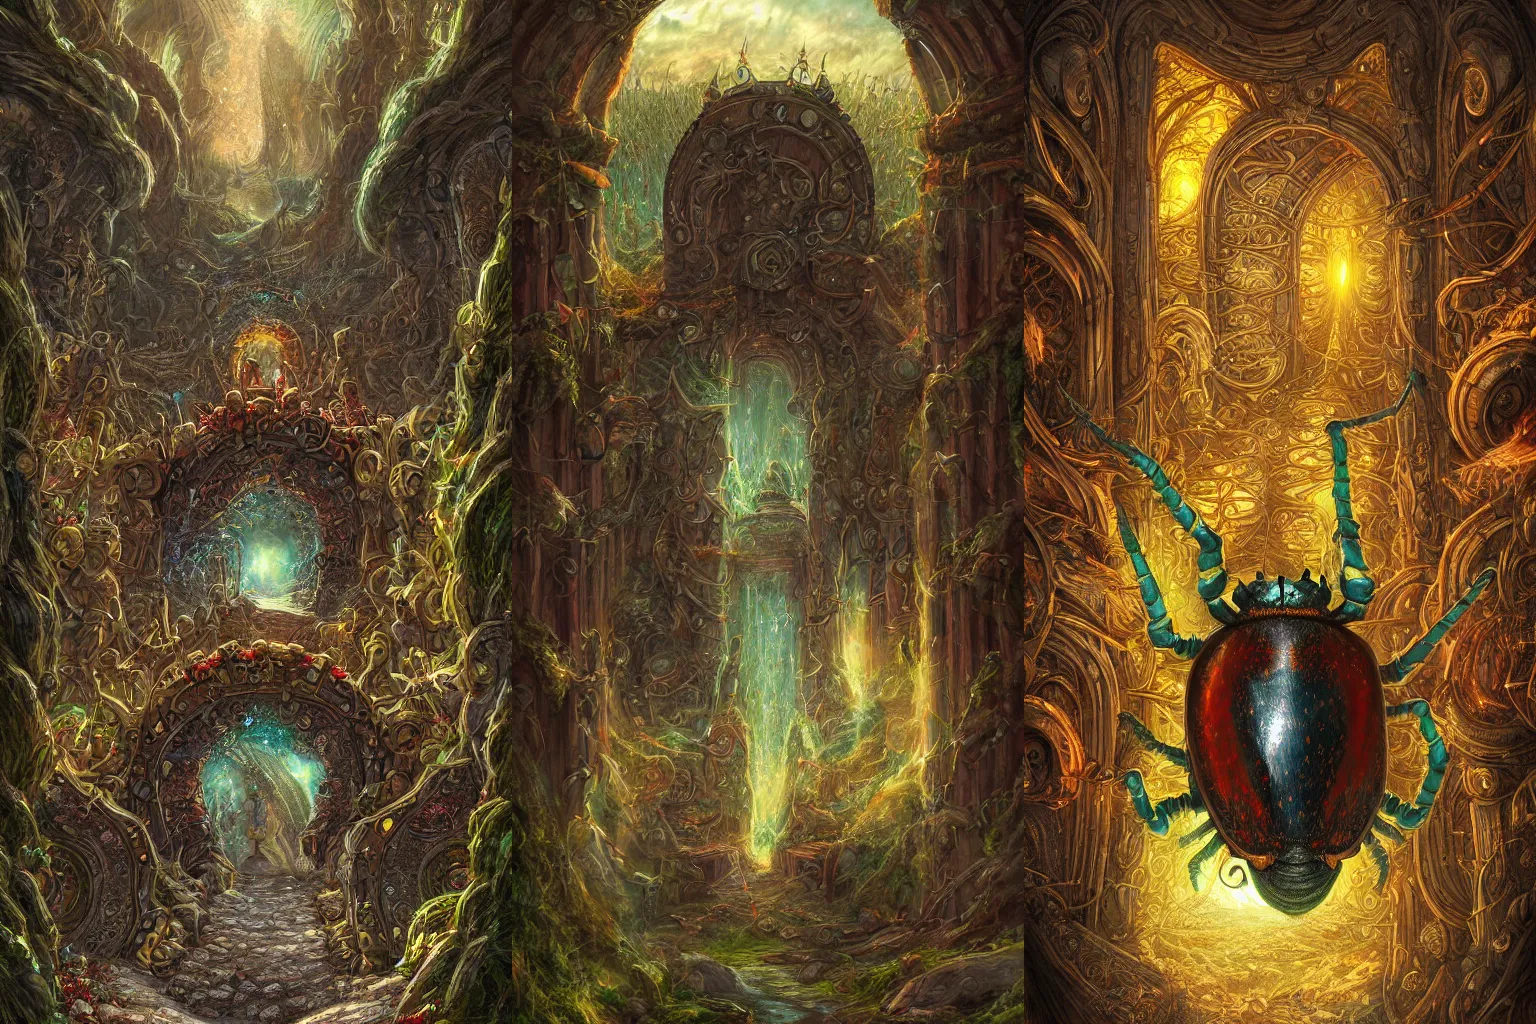 Prompt: The gate to the eternal kingdom of beetles, fantasy, digital art, HD, detailed.